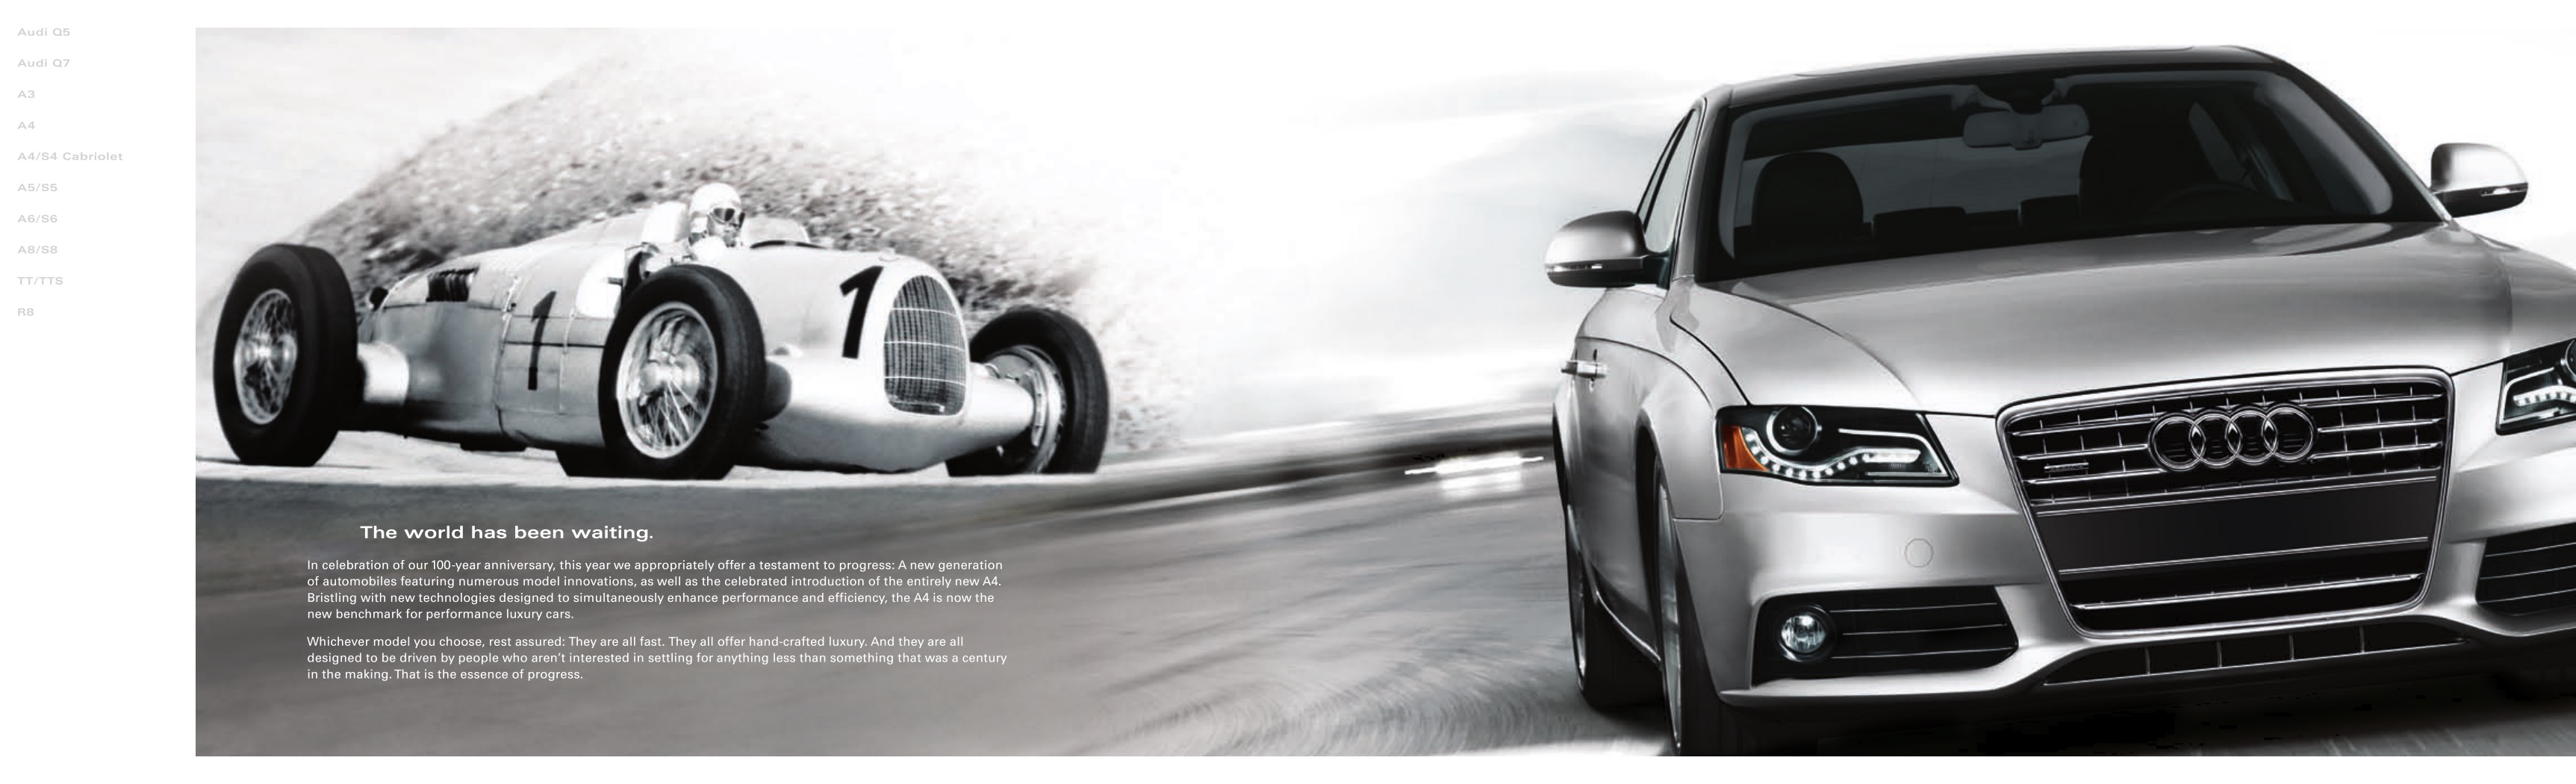 2009 Audi Brochure Page 10